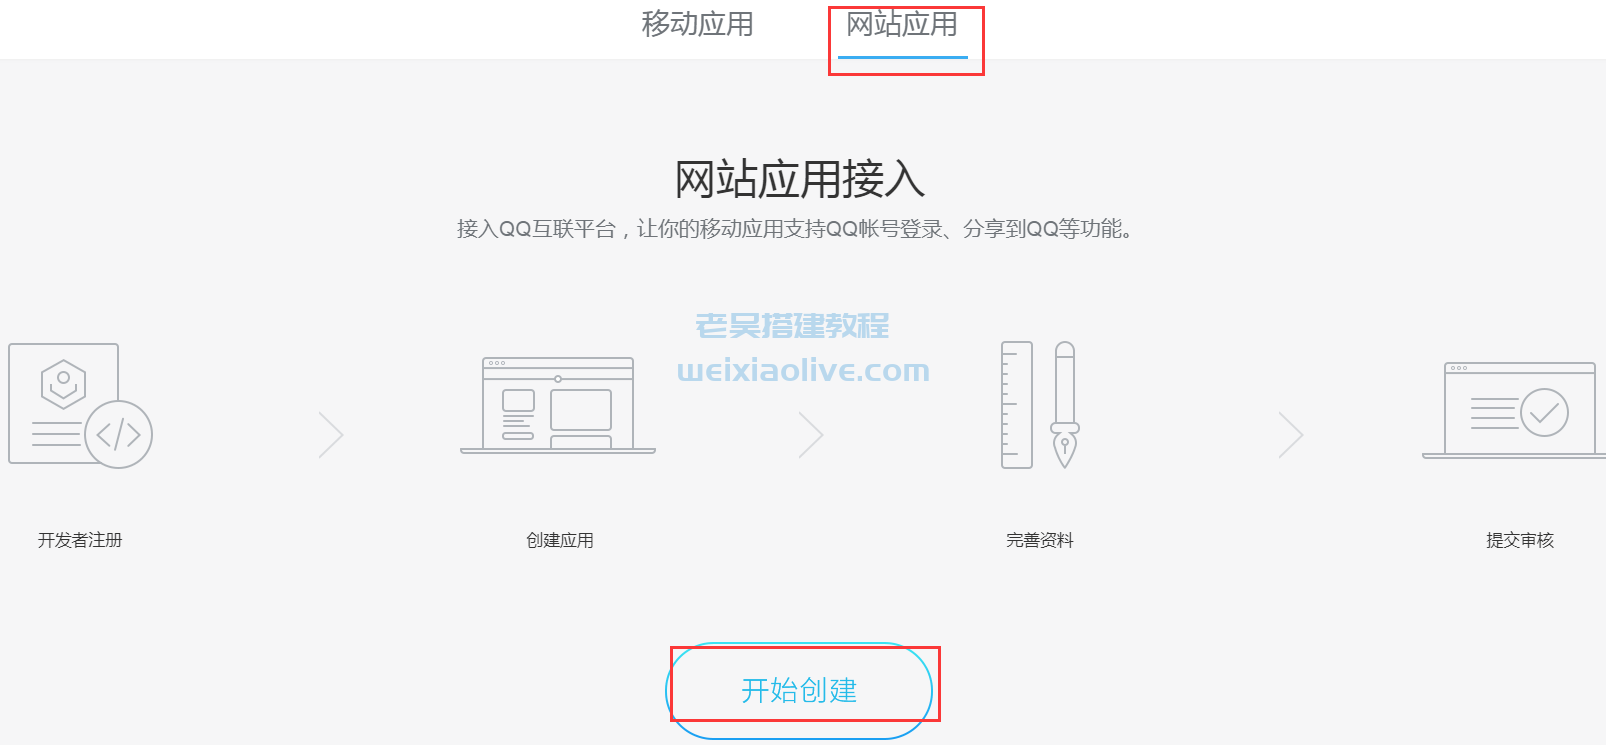 QQ快捷登录接口申请及后台配置教程  第1张